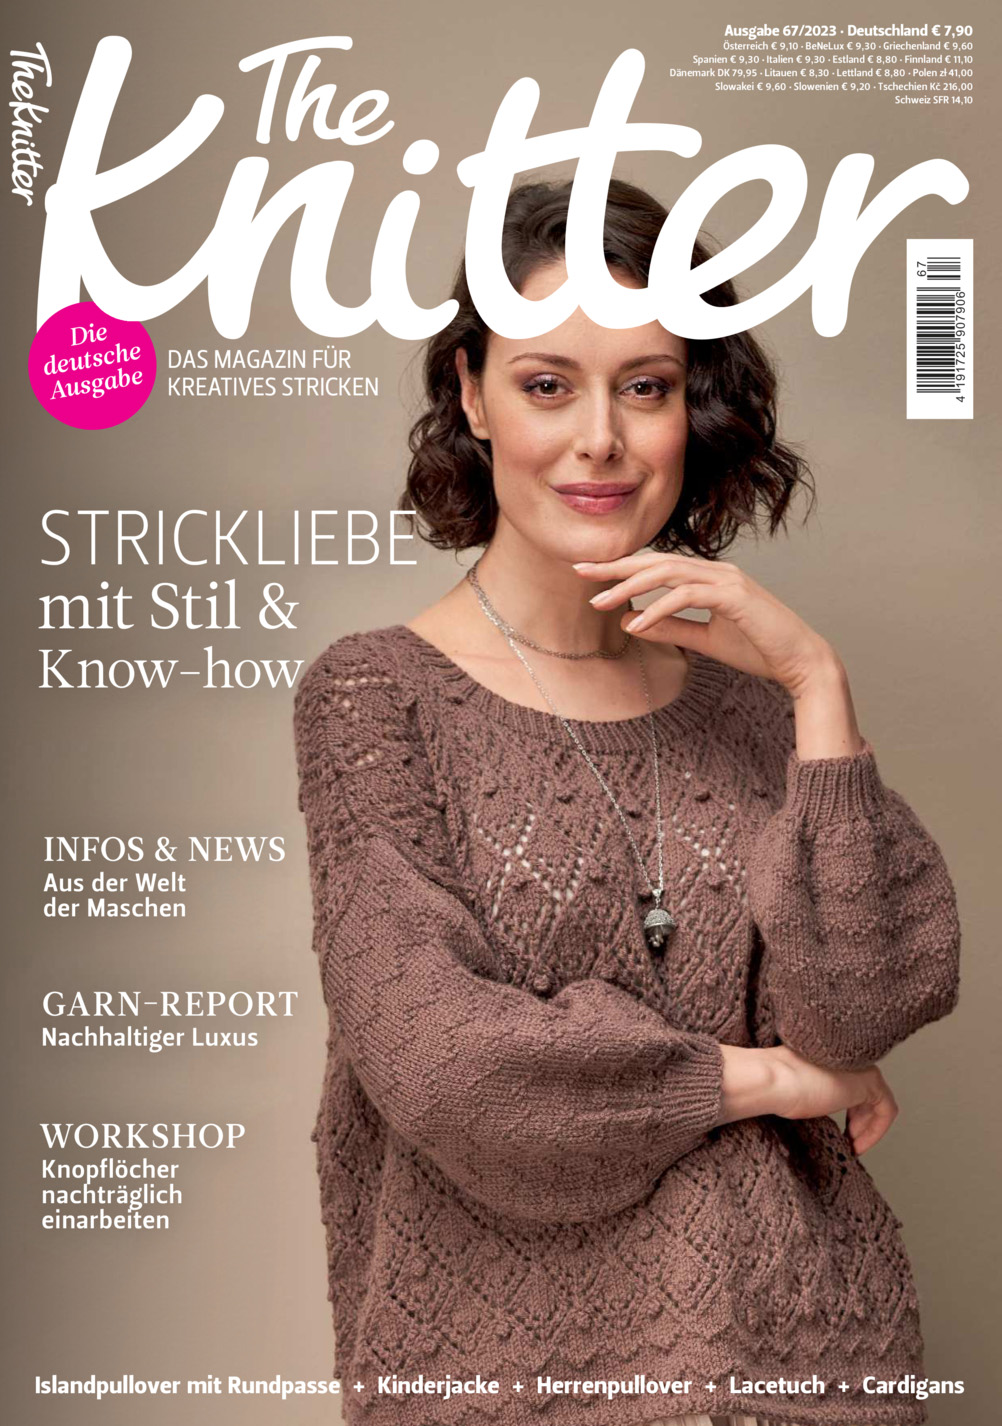 E-Paper: The Knitter 67/2023 - Strickliebe mit Stil & Know-how